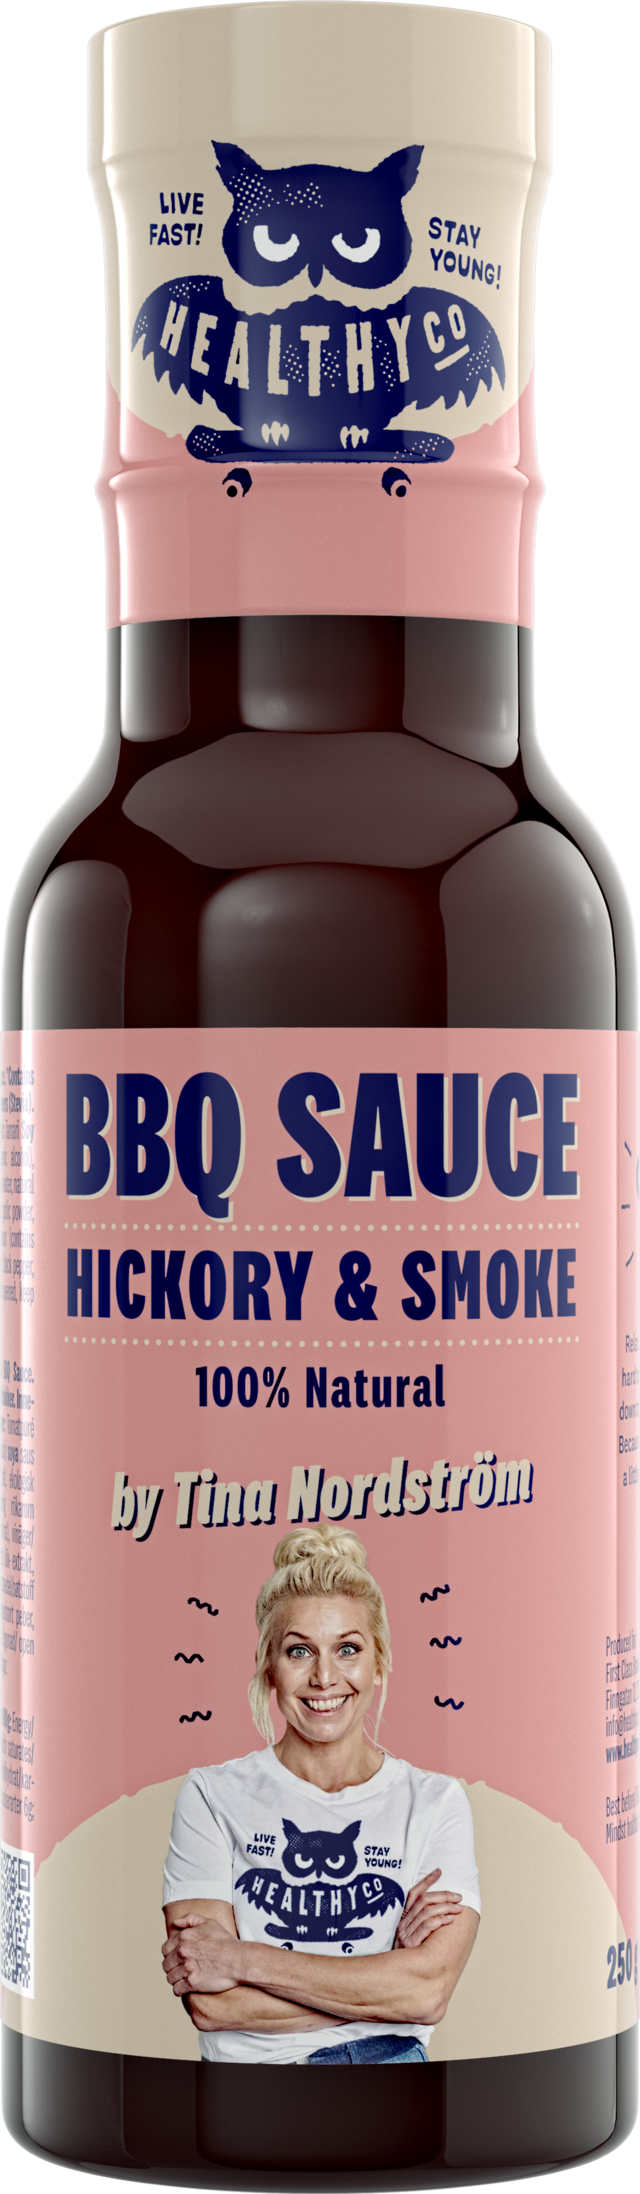 Healthyco_BBQ_Sauce_SmokenHickory.1.png